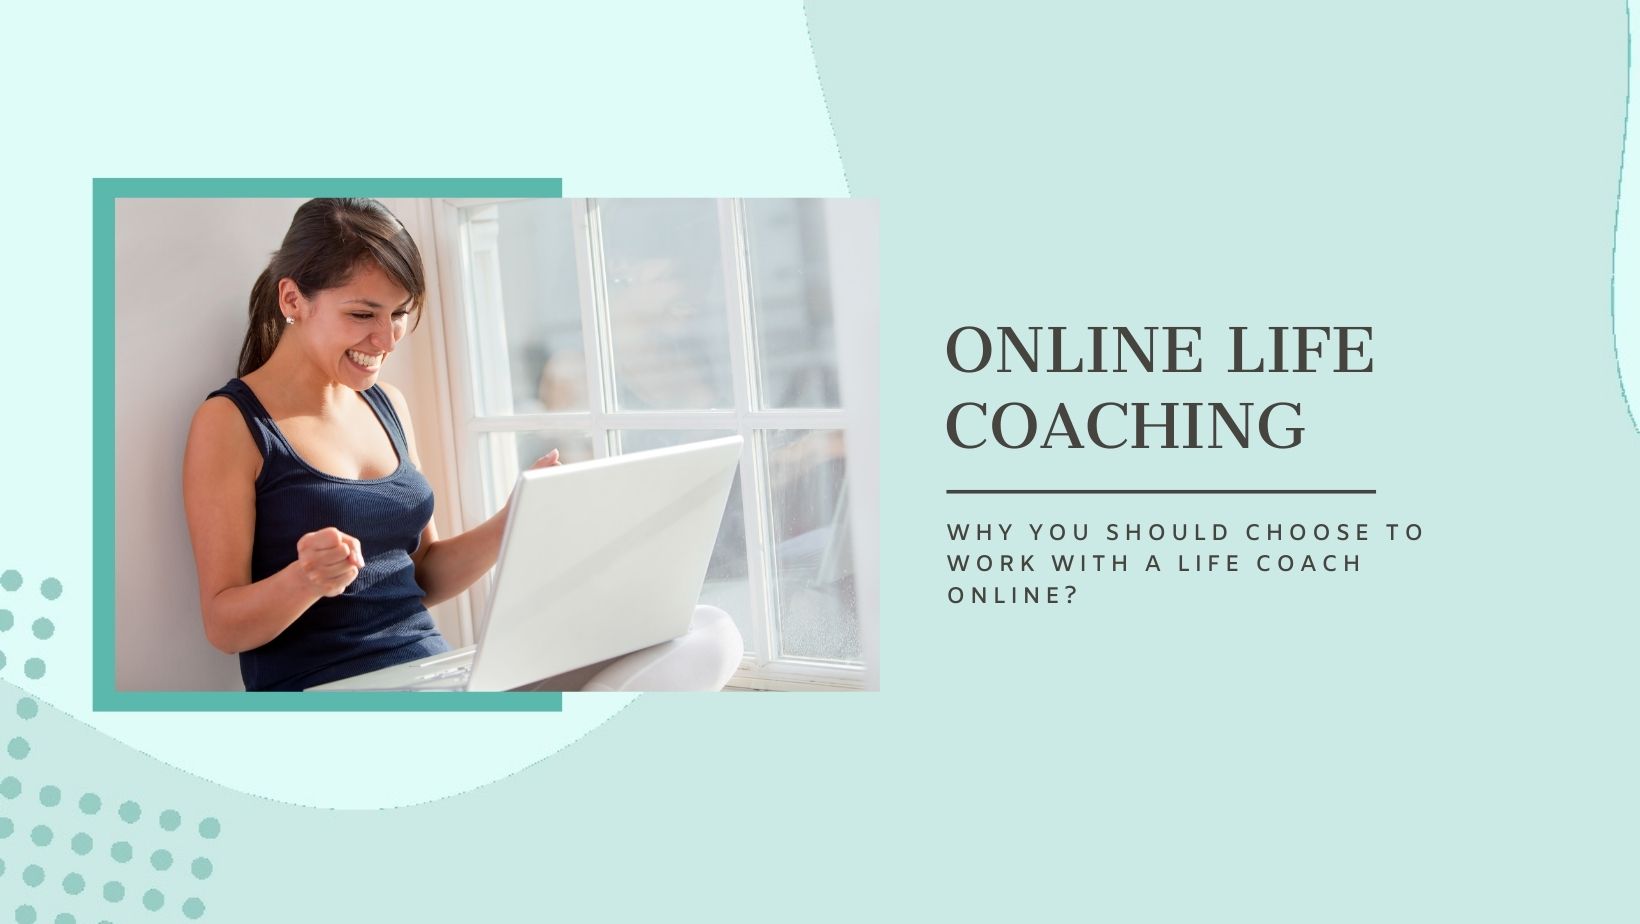 Online life coaching